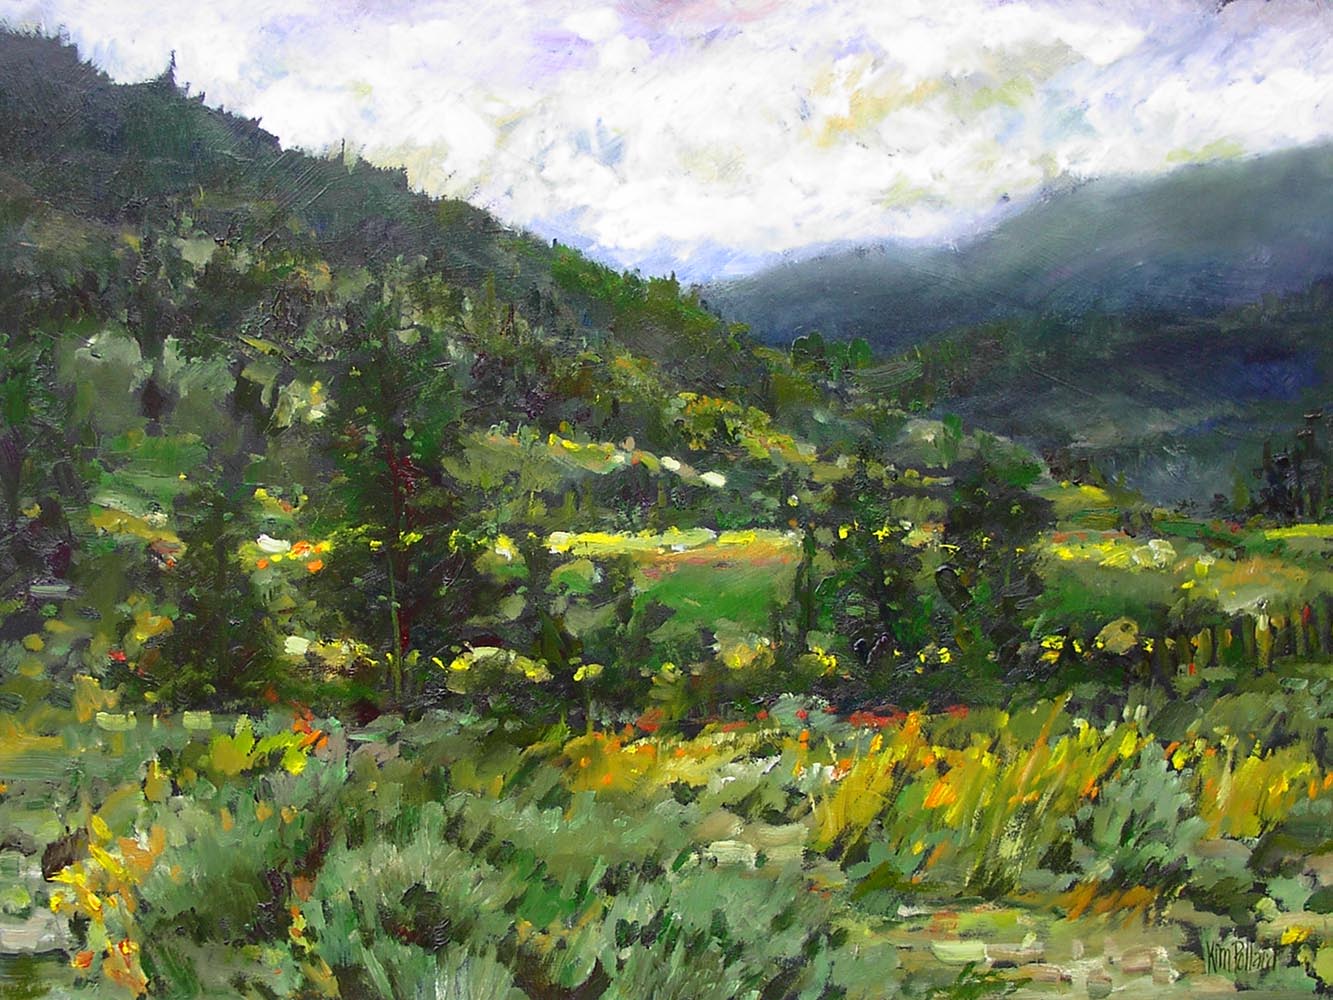 sage meadow | Landscapes of British Columbia | Artist painter Kim Pollard | Canada | Pacific Northwest